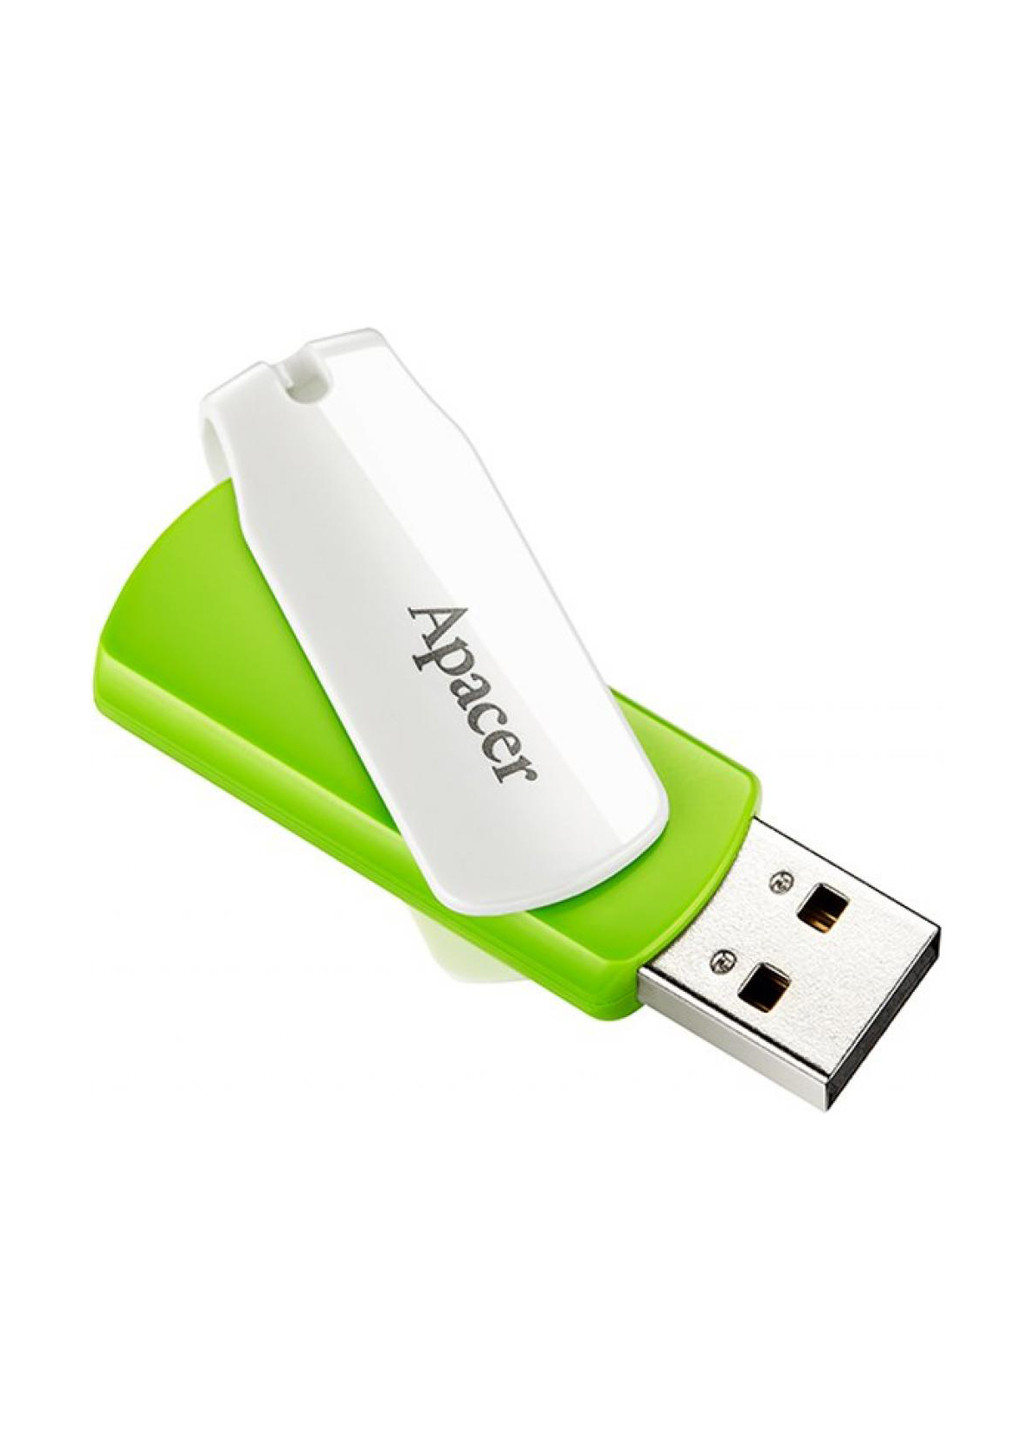 Флеш память USB 64GB USB 2.0 AH335 Green/White (AP64GAH335G-1) Apacer флеш память usb apacer 64gb usb 2.0 ah335 green/white (ap64gah335g-1) (144462497)